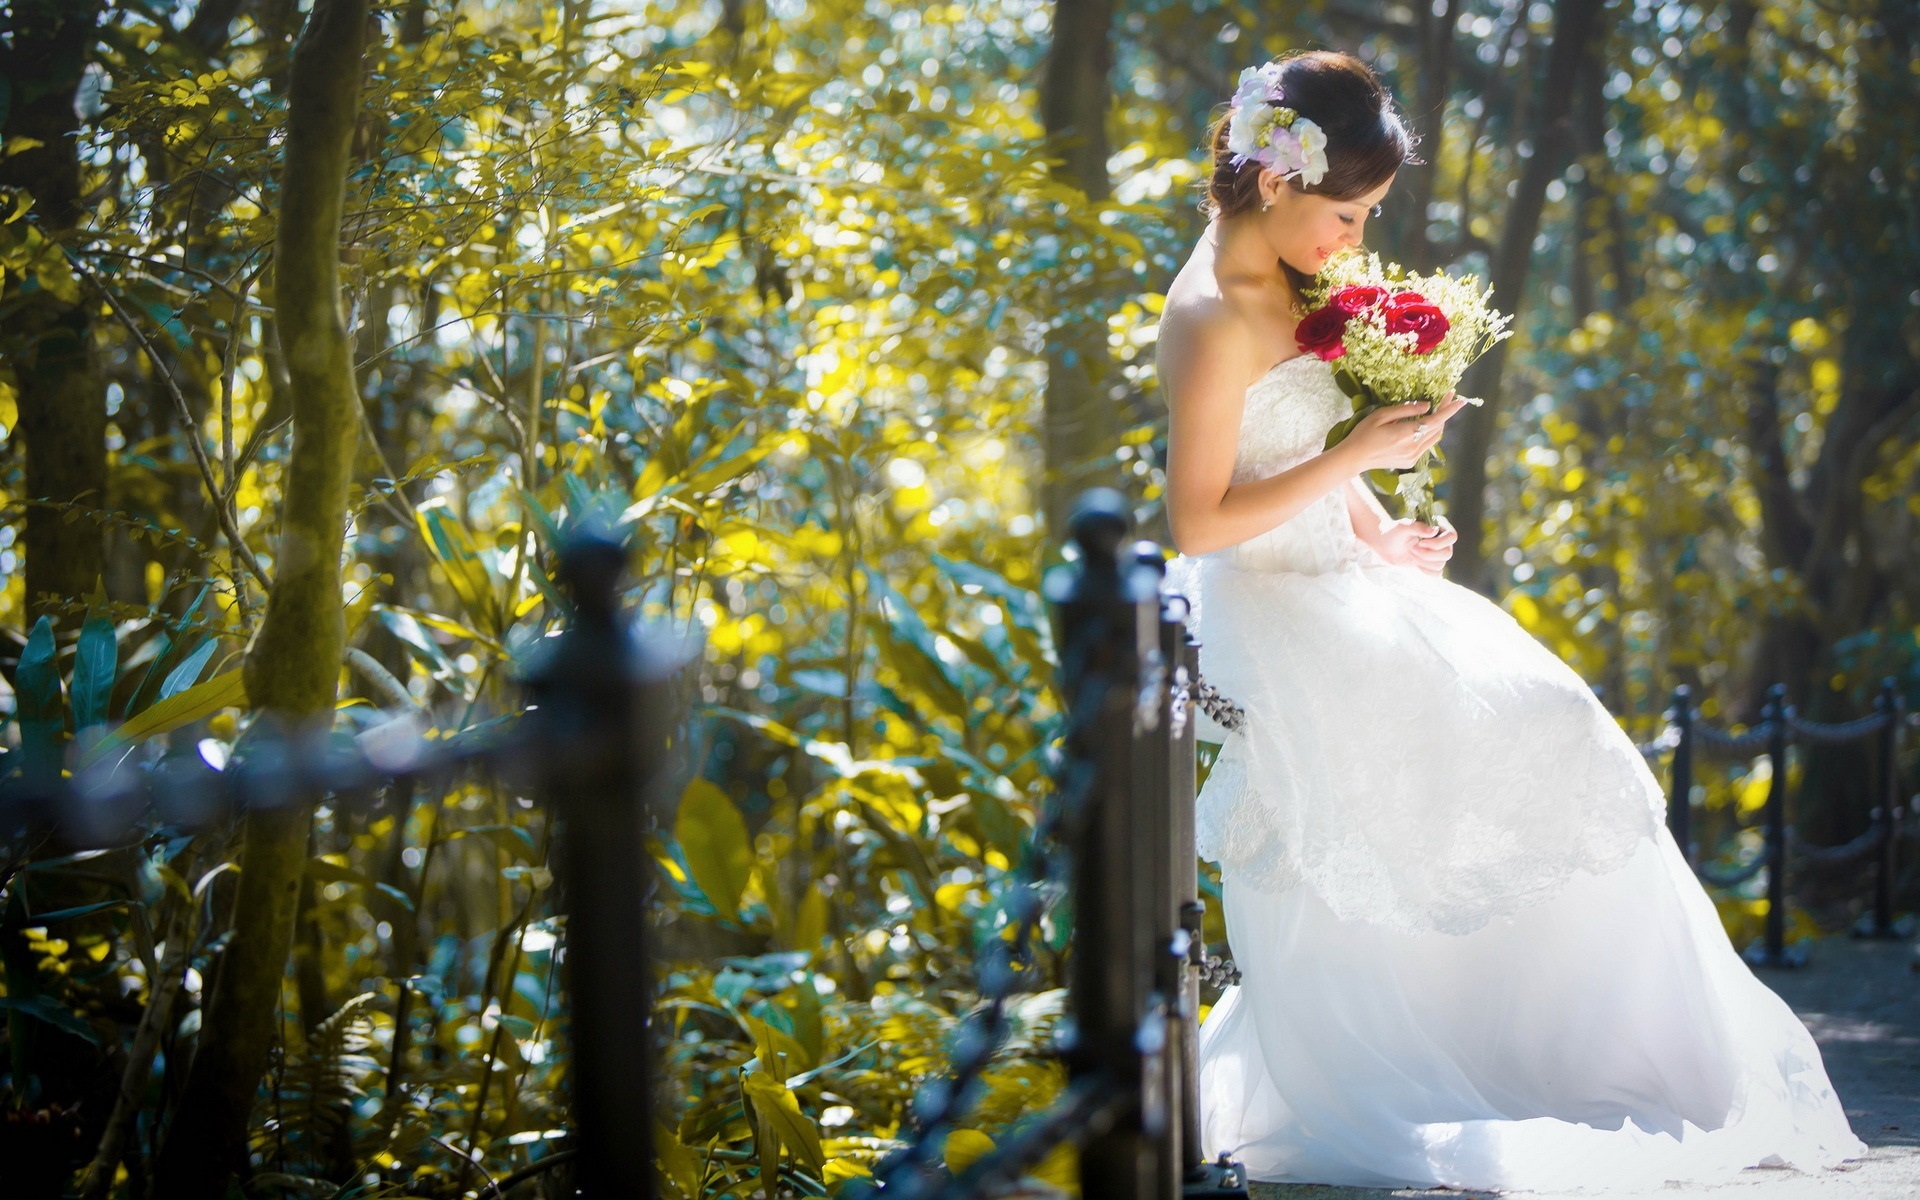 Beautiful-bride-girl-asian-flowers_1920x1200.jpg